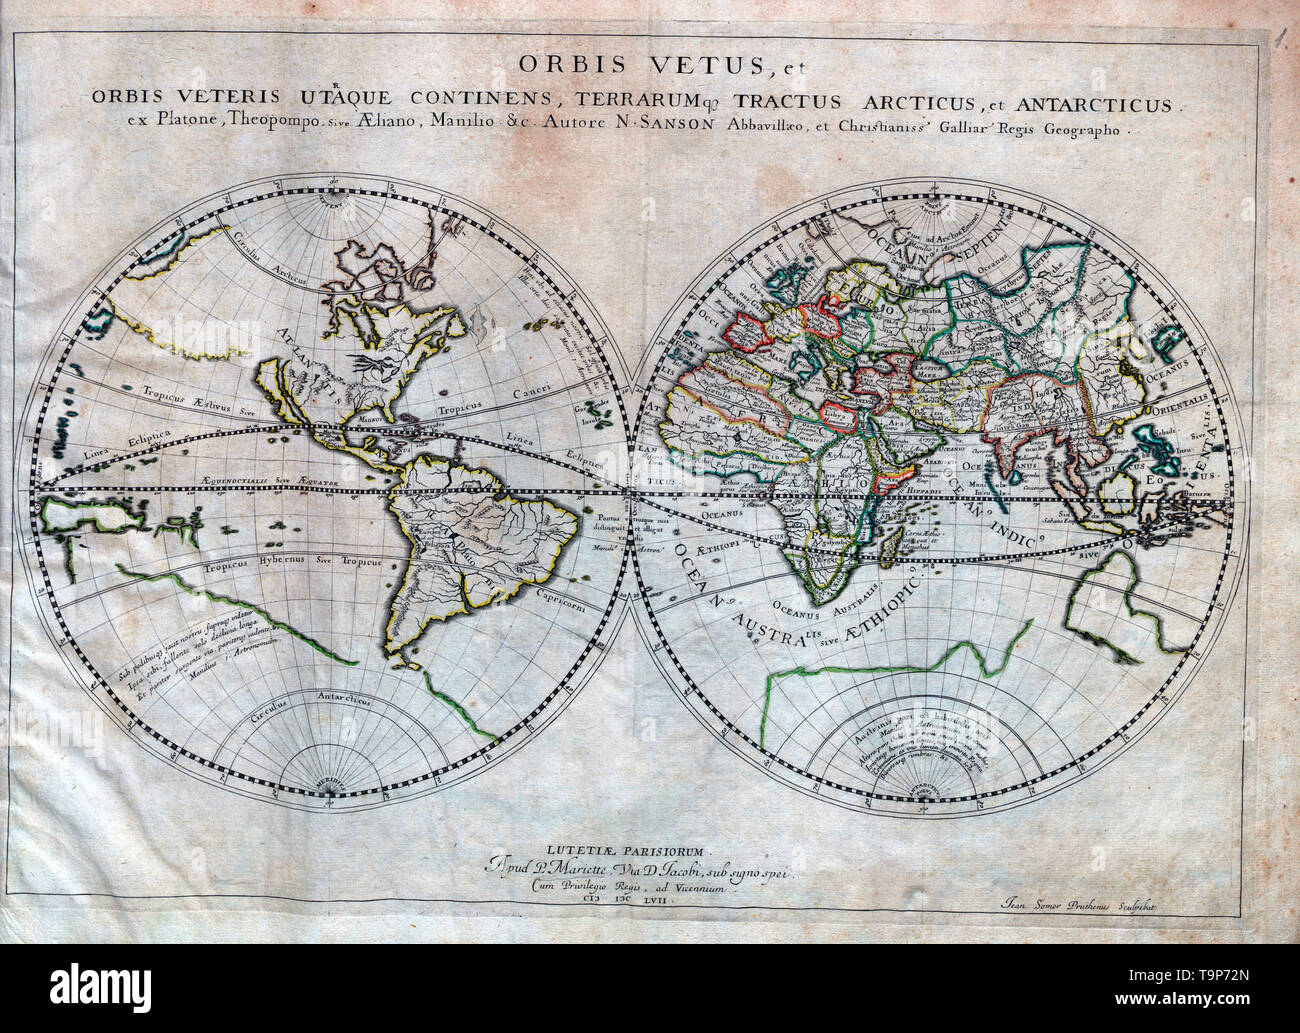 Map of Orbis Vetus - Earth - Sanson Atlas, circa 1700 Stock Photo